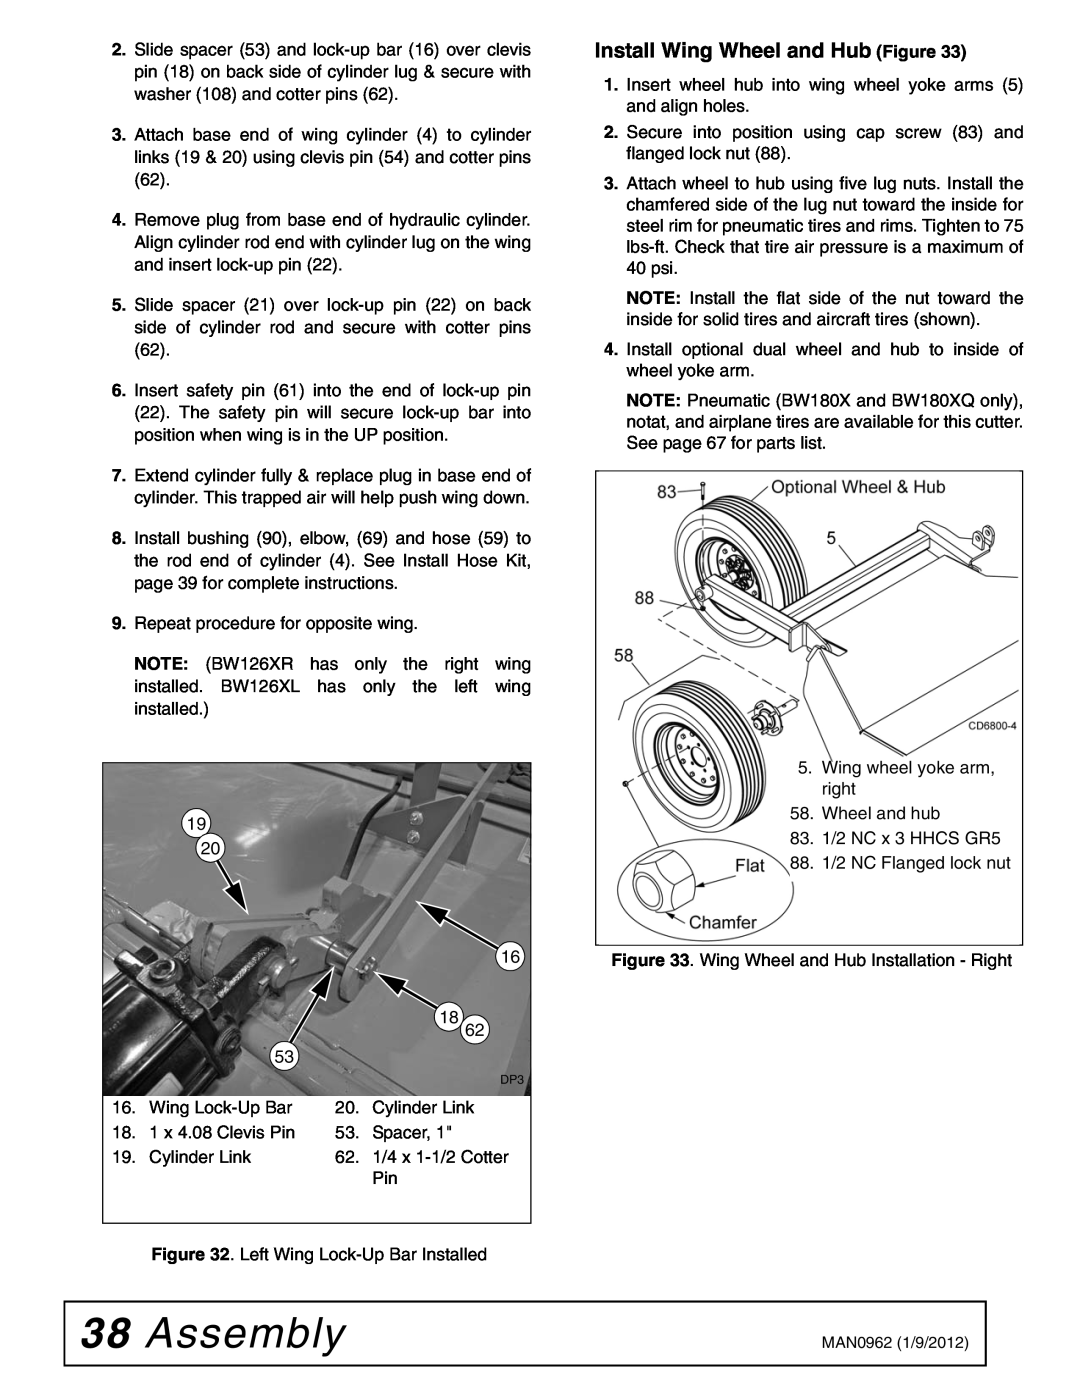 Woods Equipment BW180XQ, BW126XQ manual Assembly, Install Wing Wheel and Hub Figure 